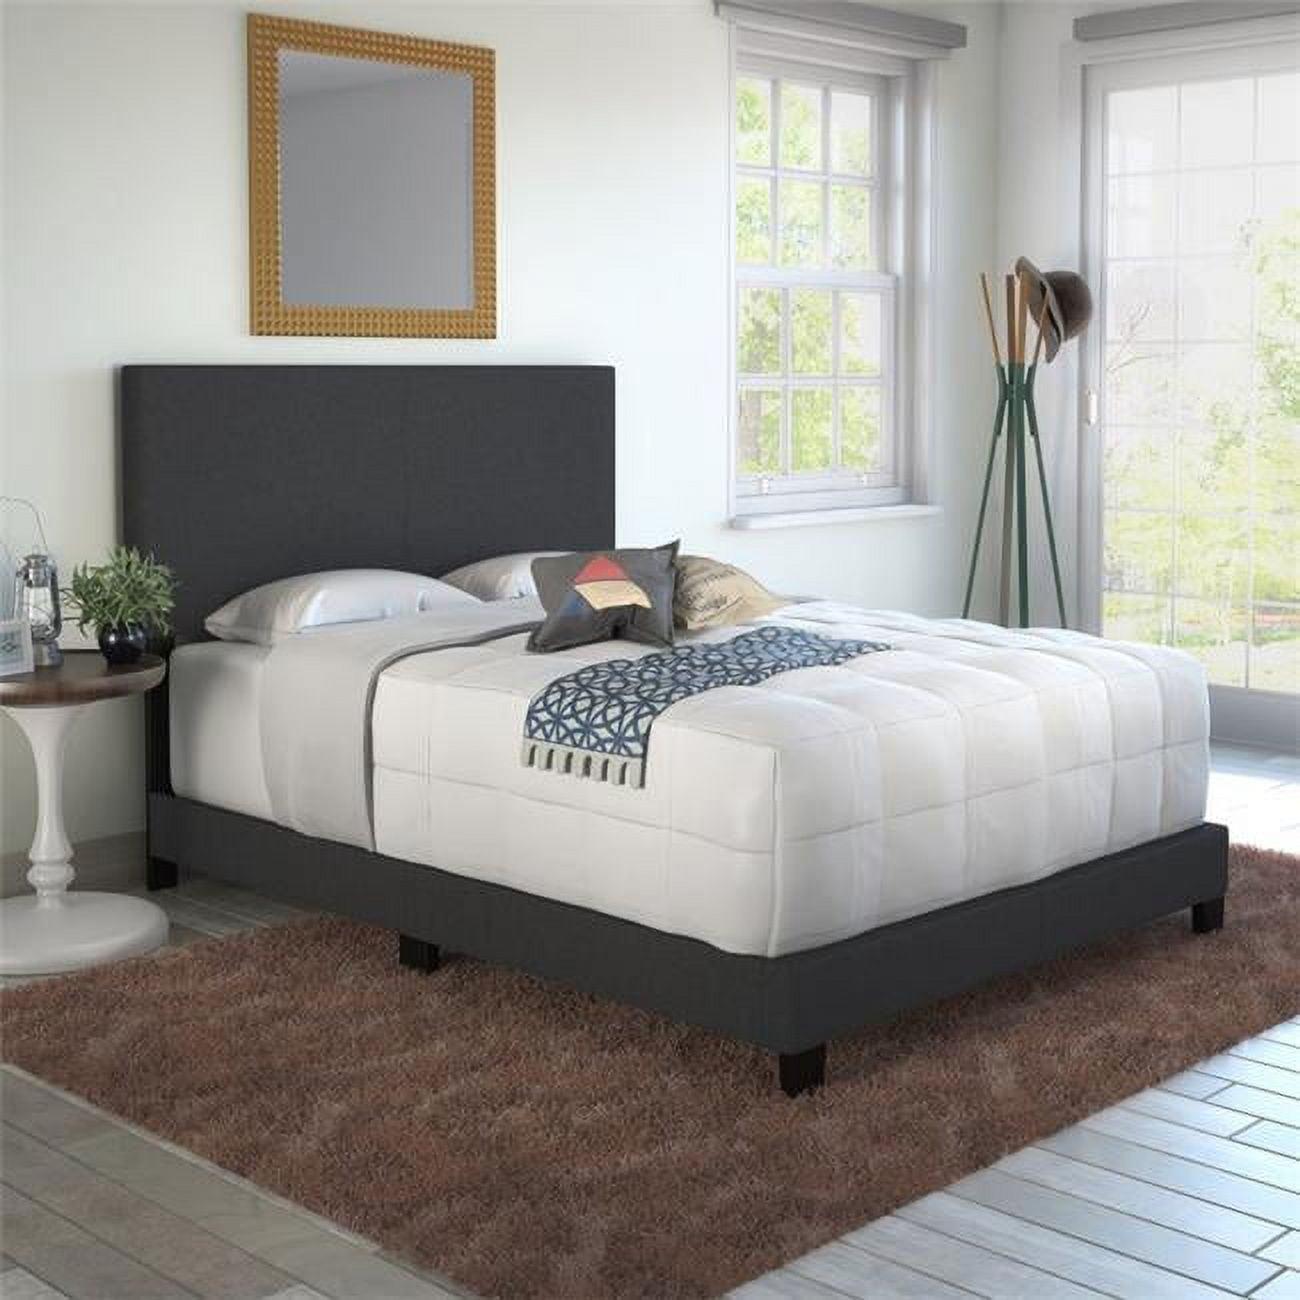 Twin Gray Linen Upholstered Platform Bed with Sleek Headboard